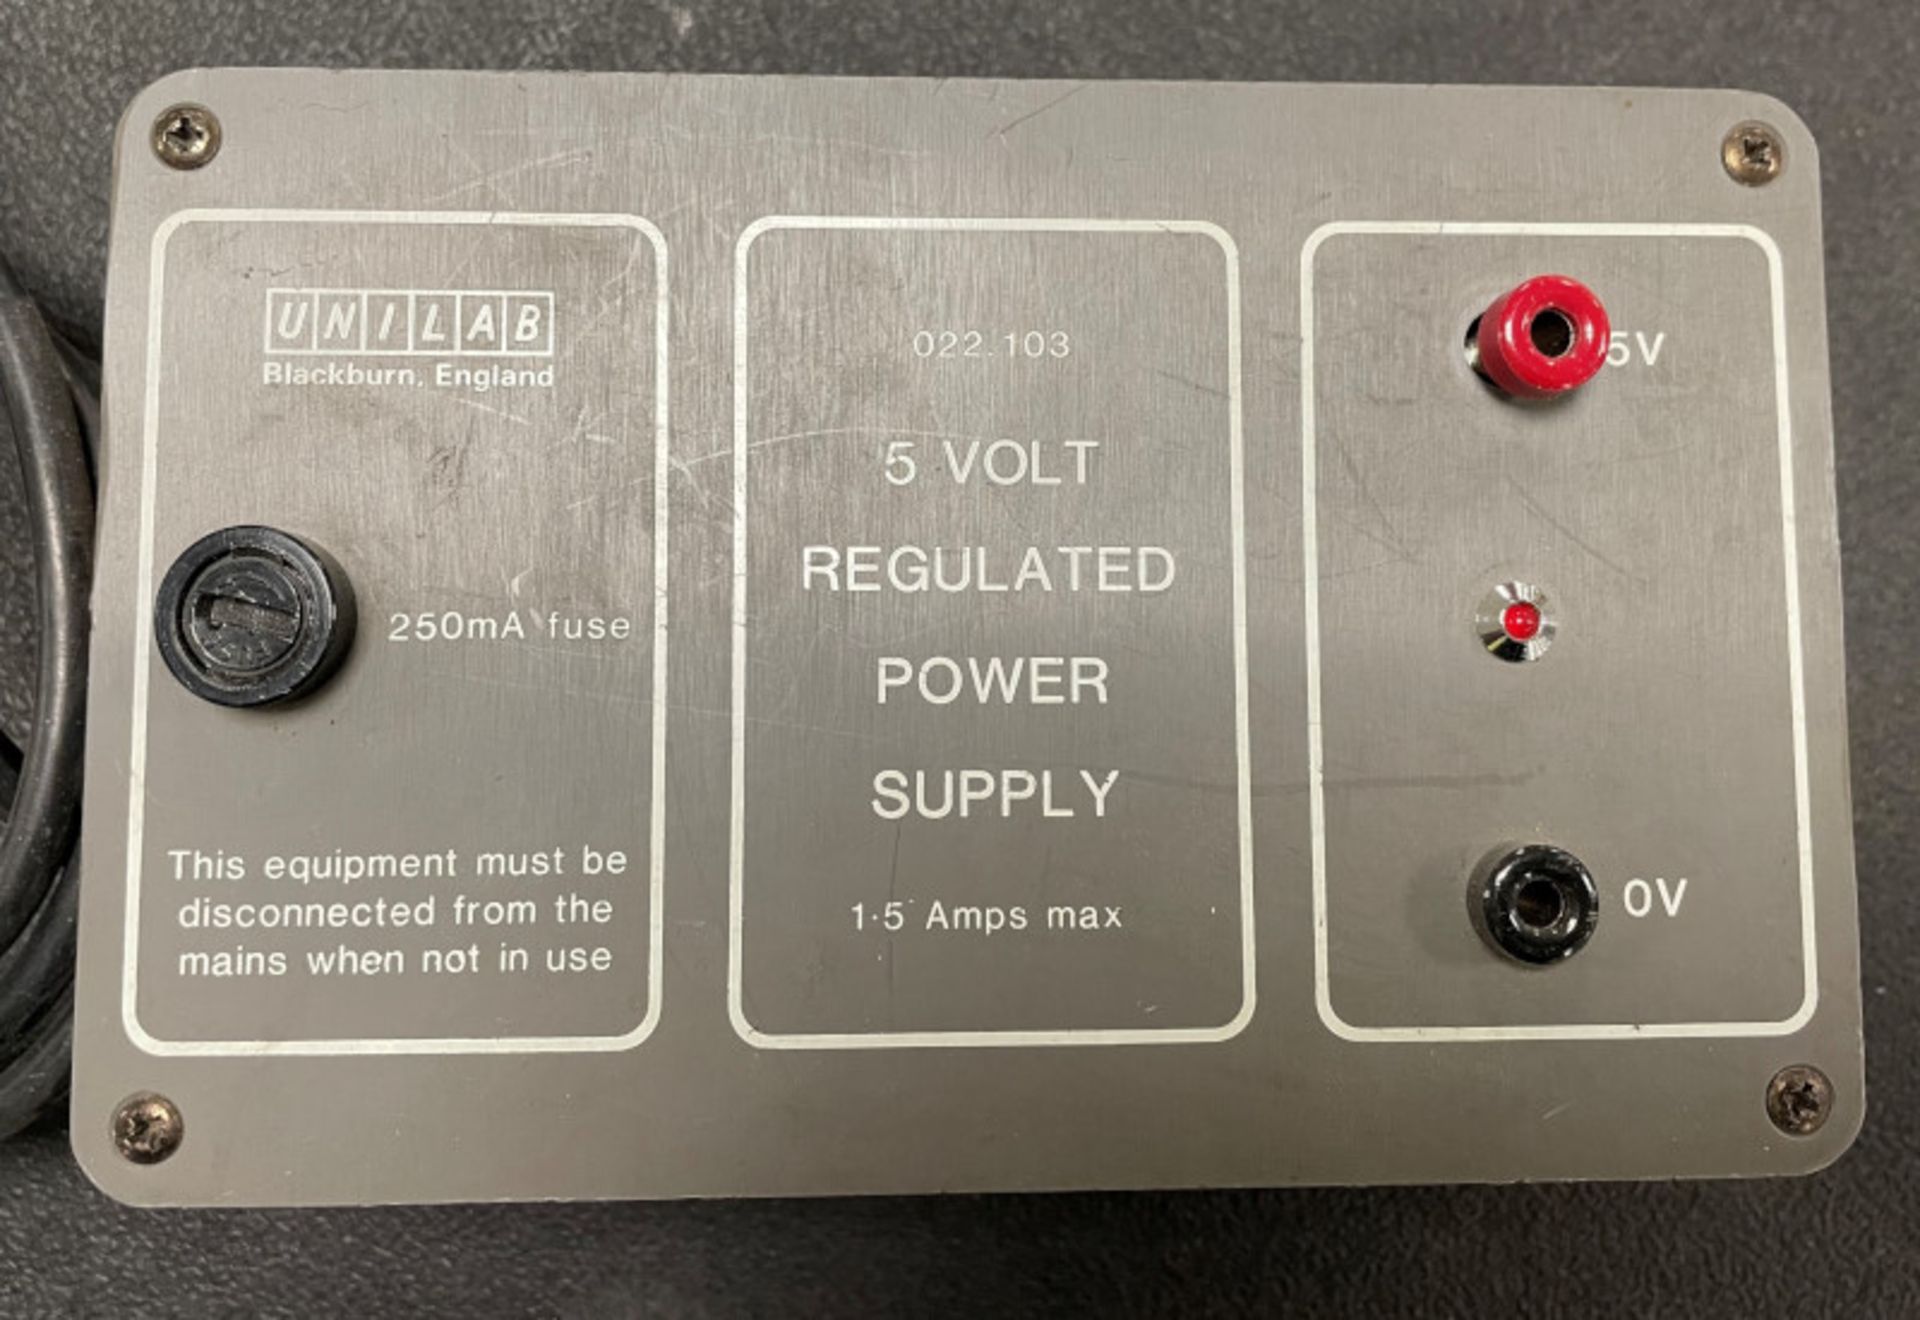 6x Unilab 5V regulated power supplies - Image 3 of 3